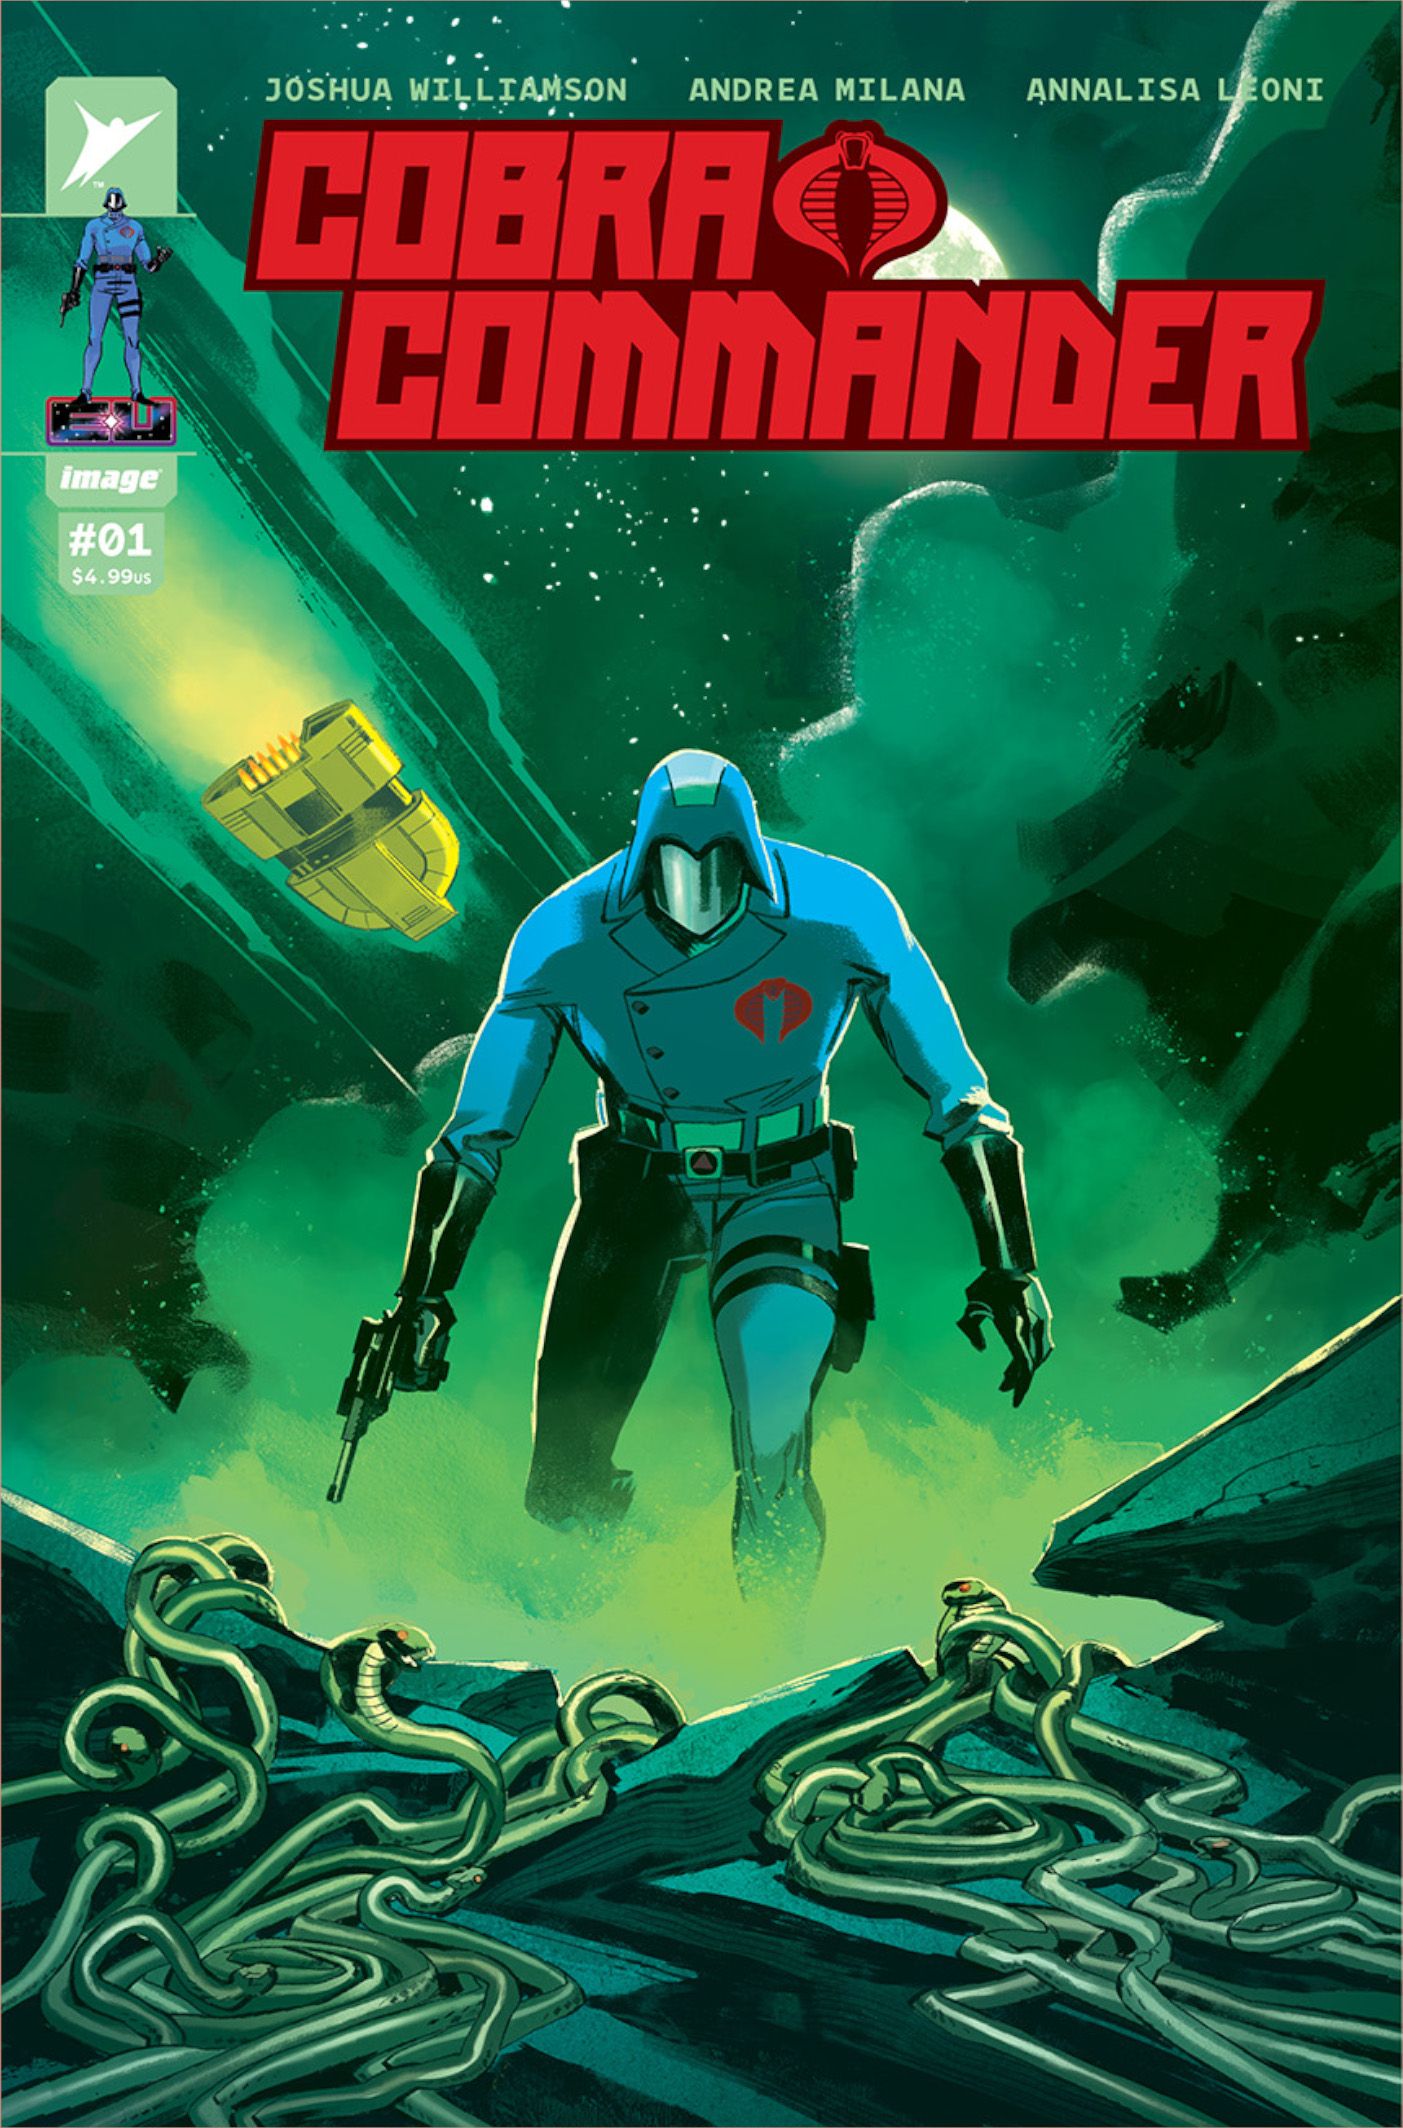 Andrea Milana main cover for Skybound Entertainment's Cobra Commander #1 